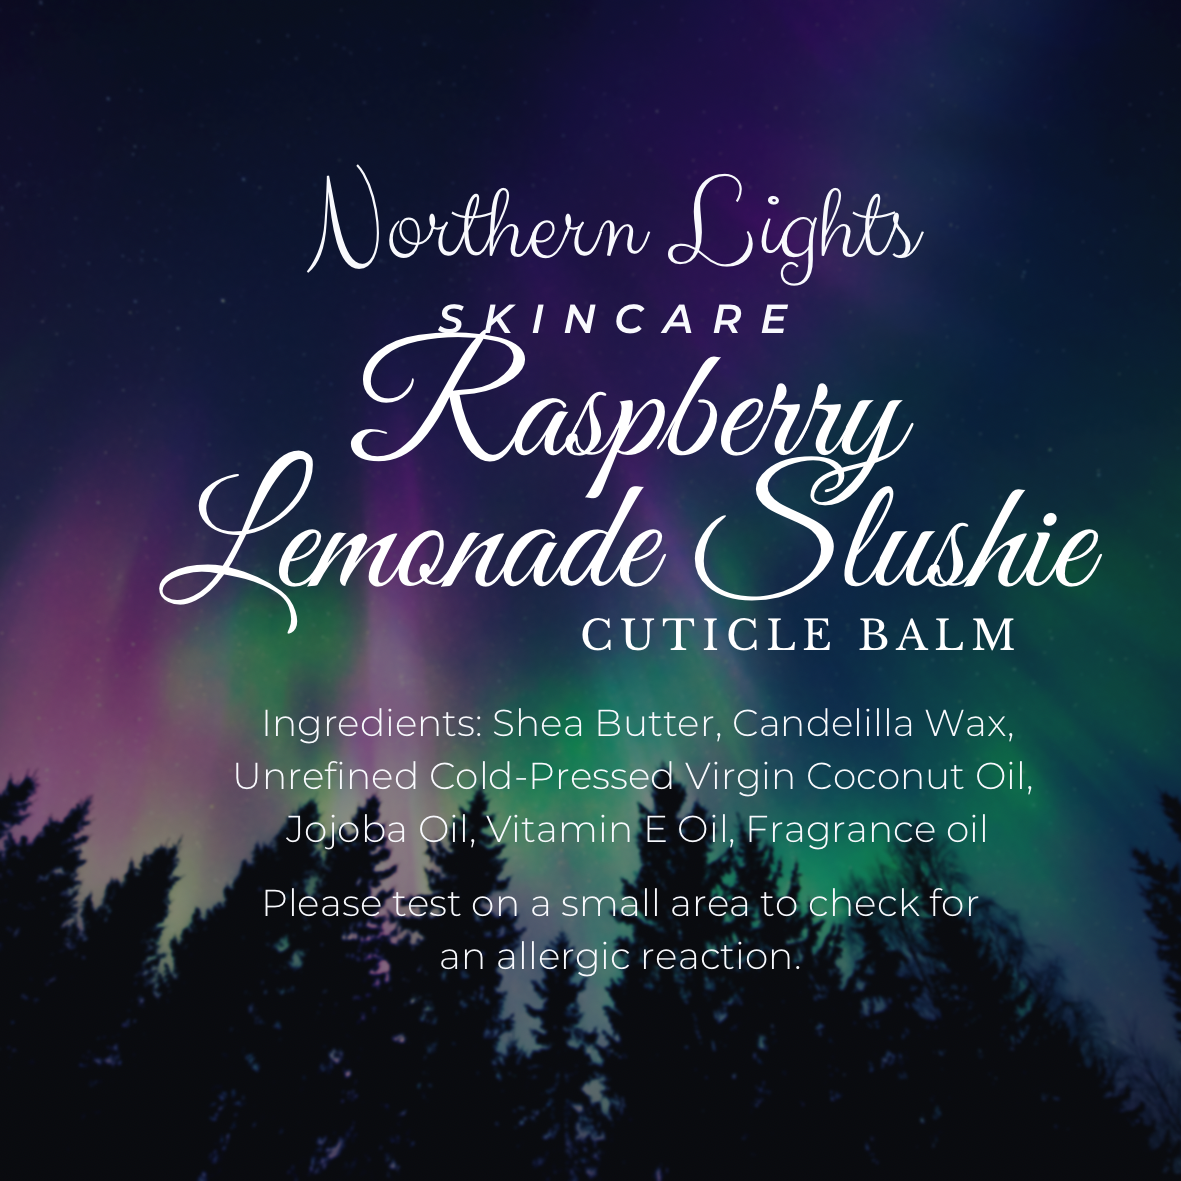 Raspberry Lemonade Slushie Cuticle Balm (retiring)